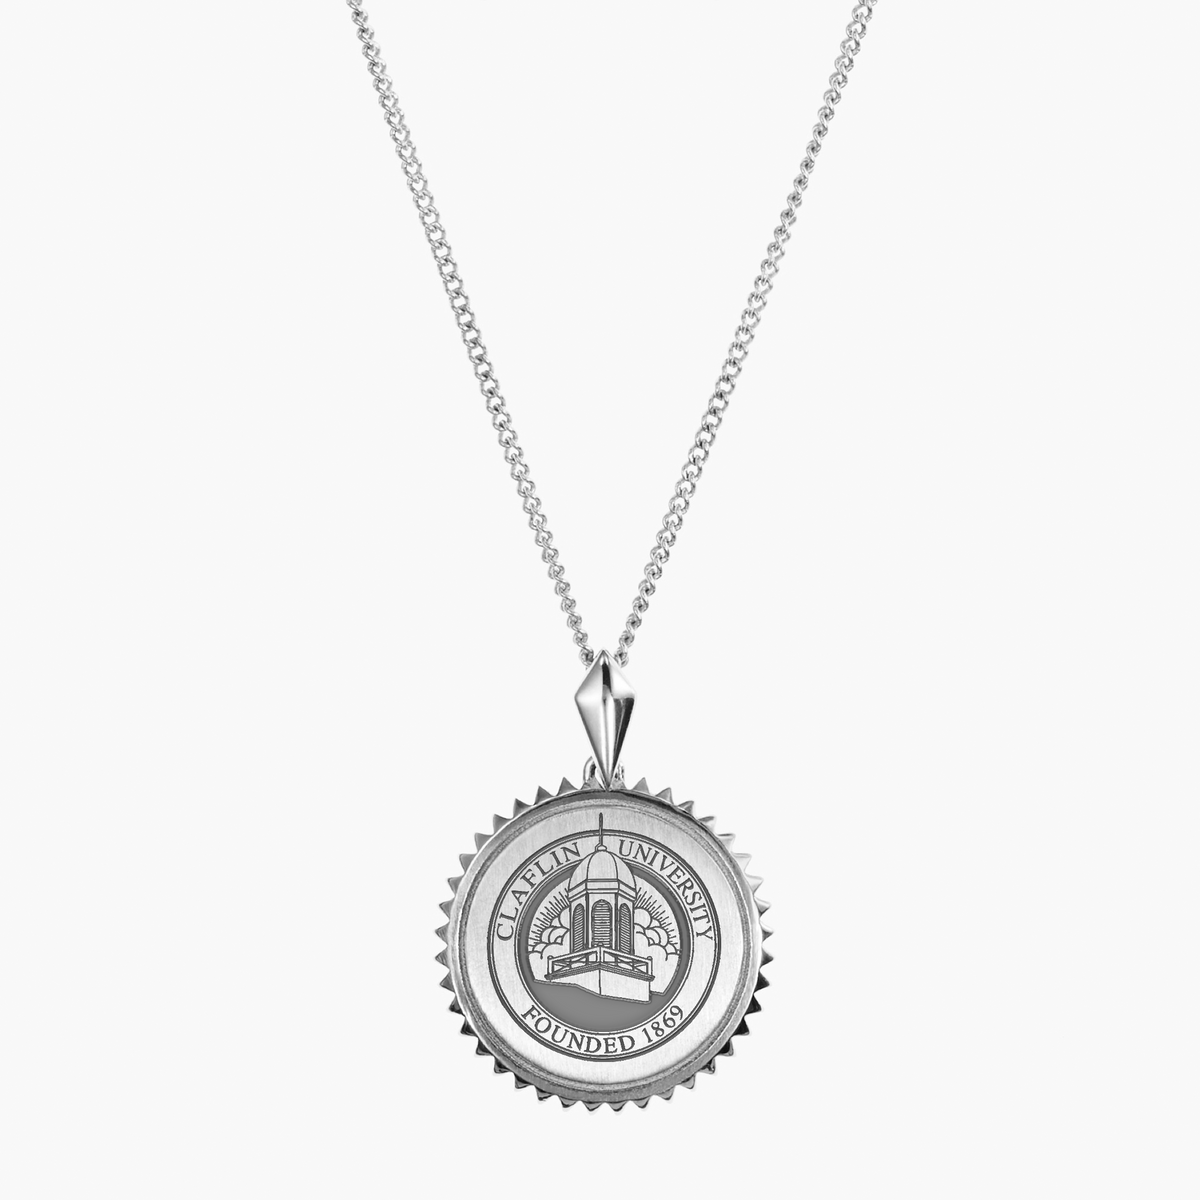 Claflin University Sunburst Necklace Silver